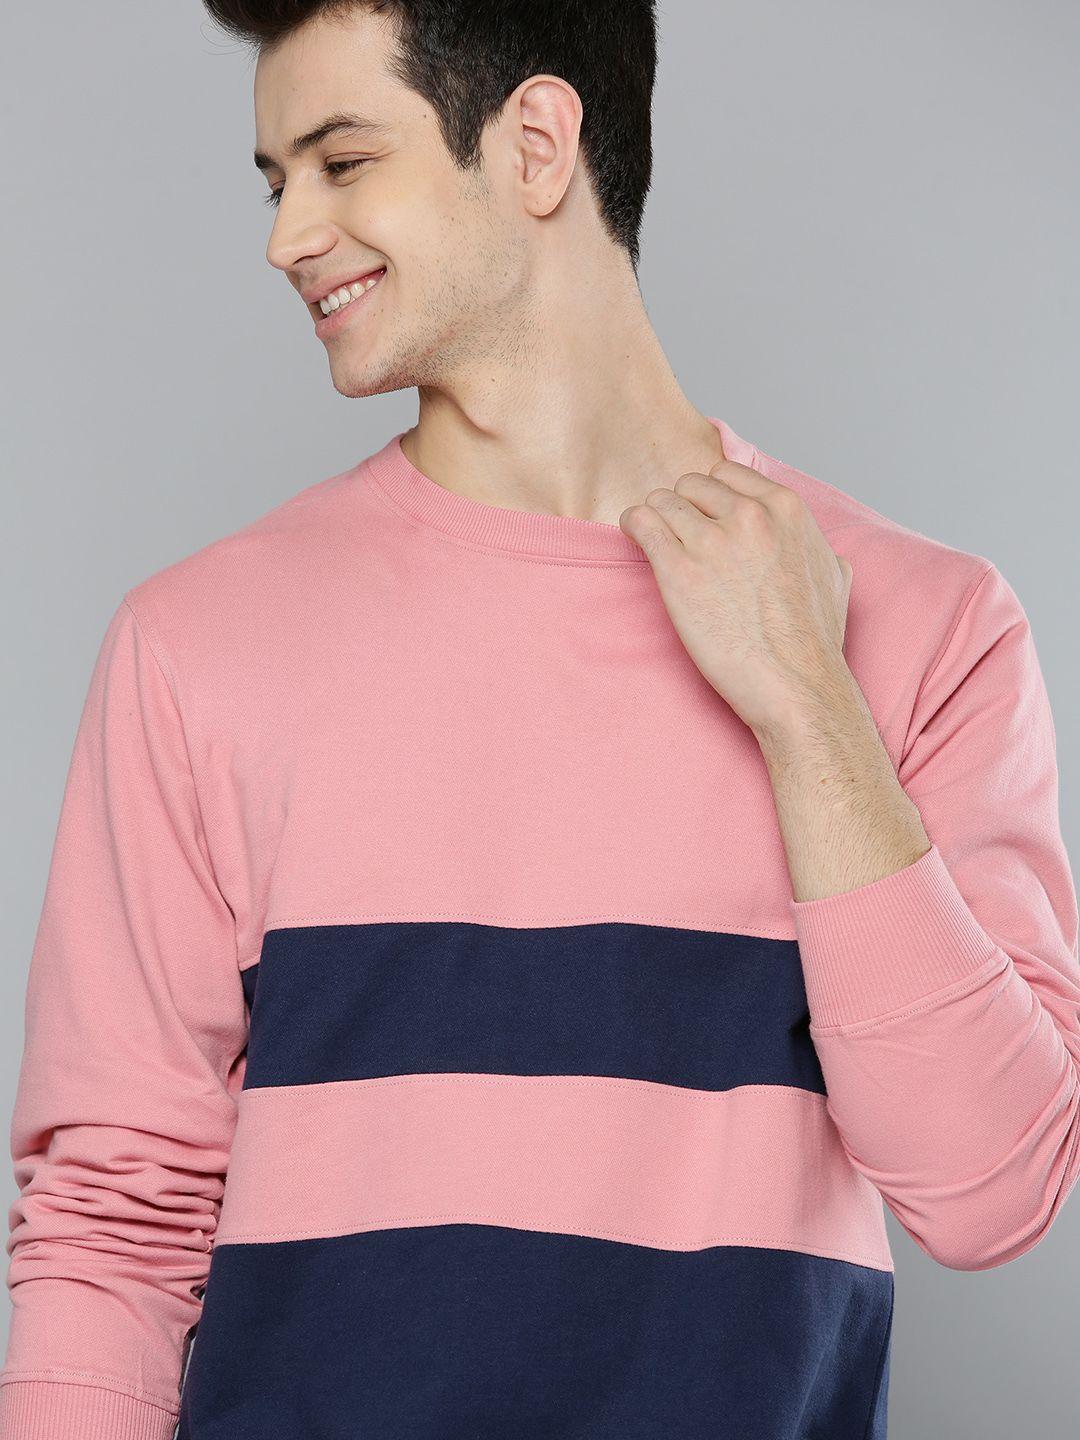 mast & harbour men pink & navy blue striped sweatshirt